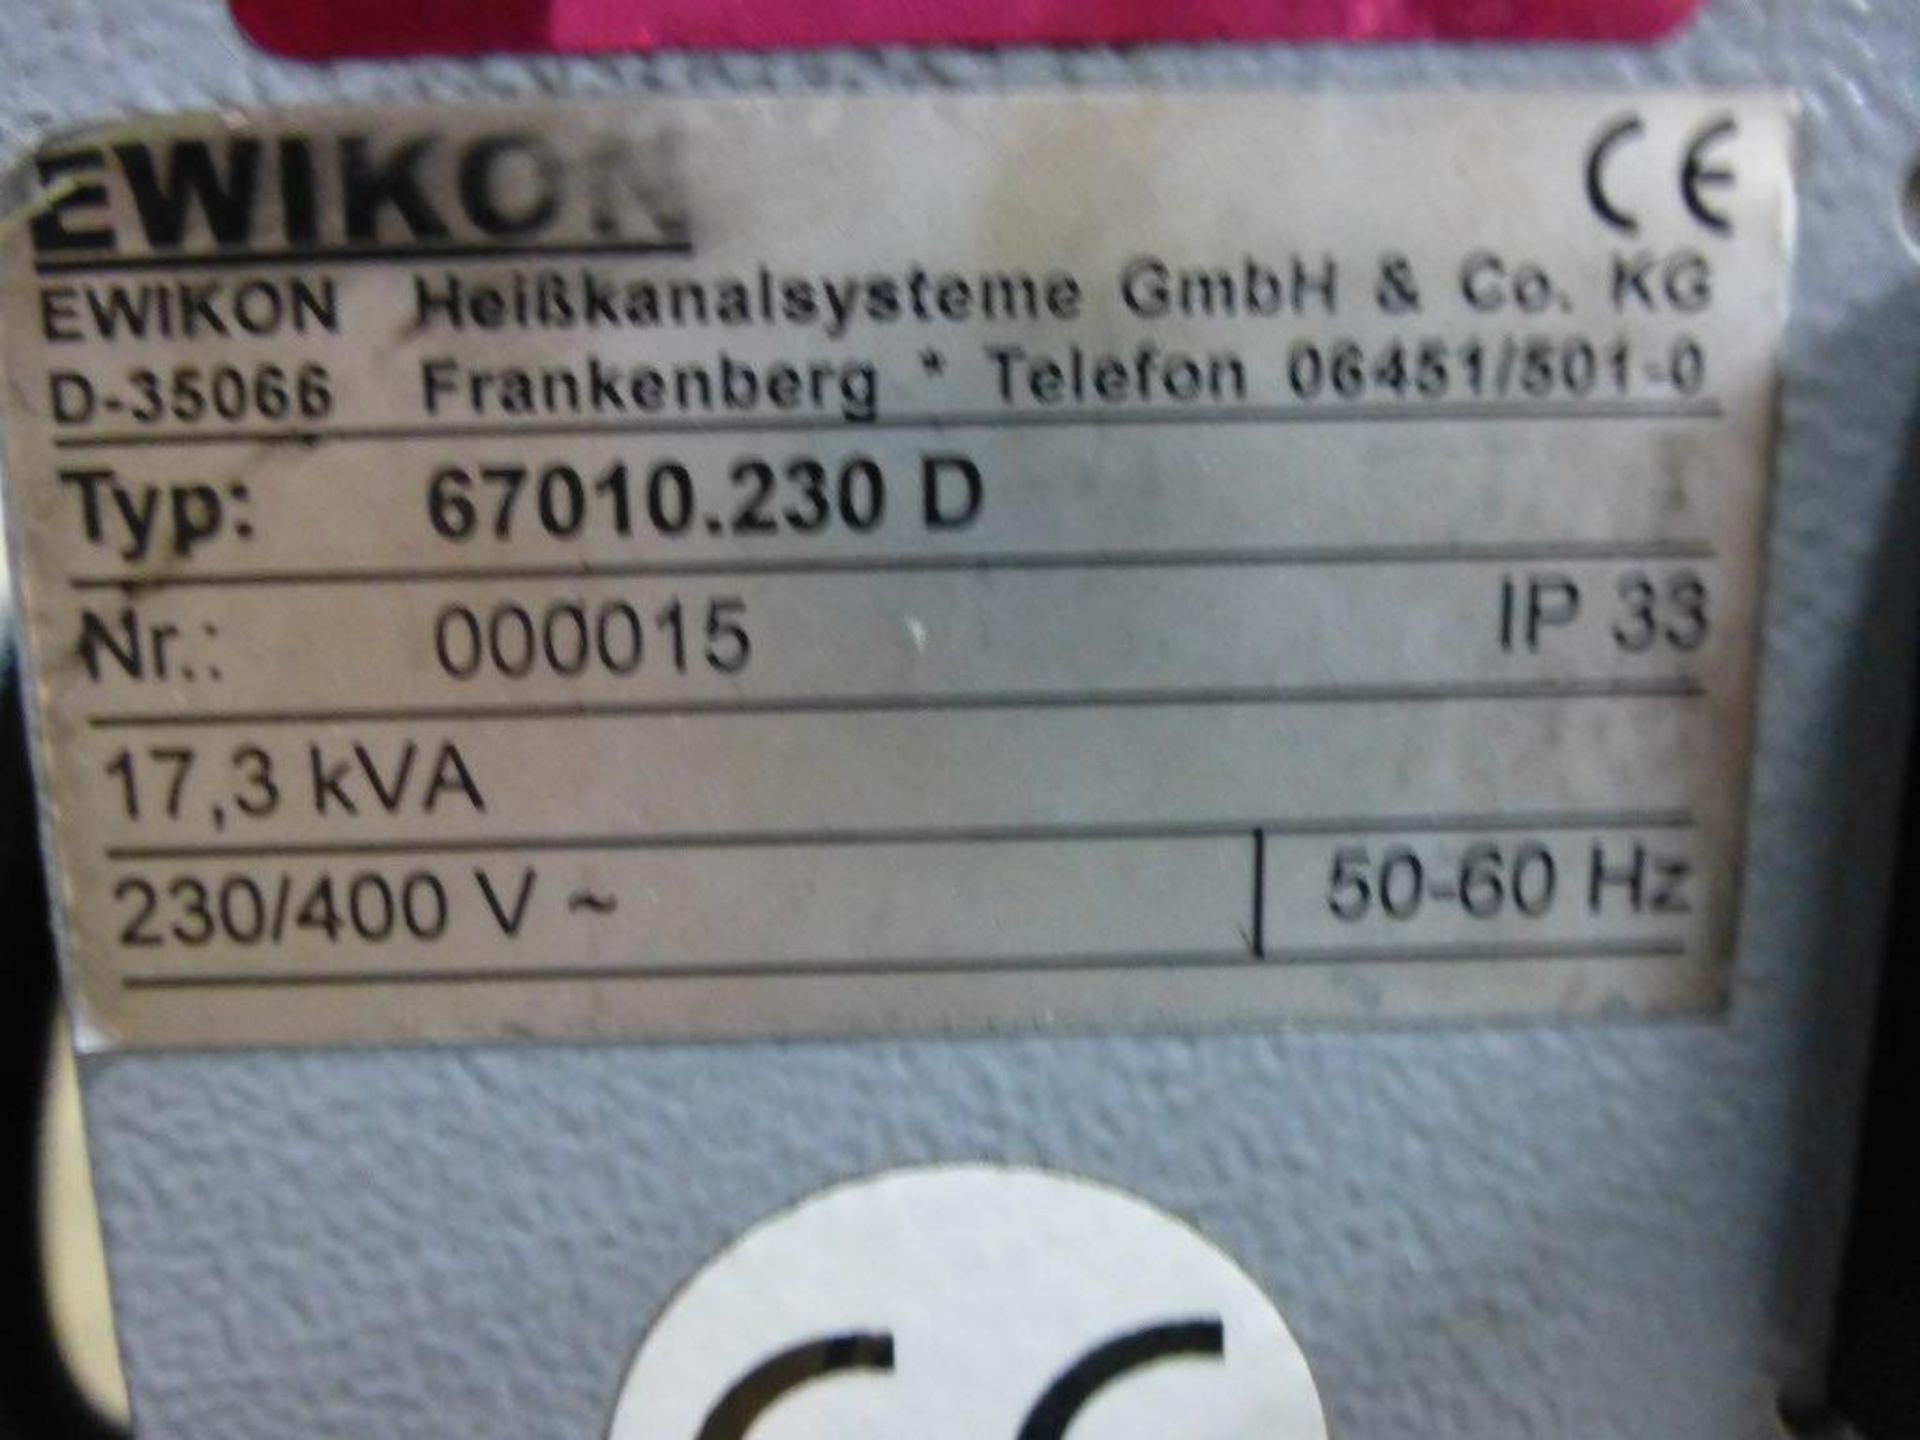 Ewikon 67010.320D temperature controller, Serial No 000015 - Image 3 of 3